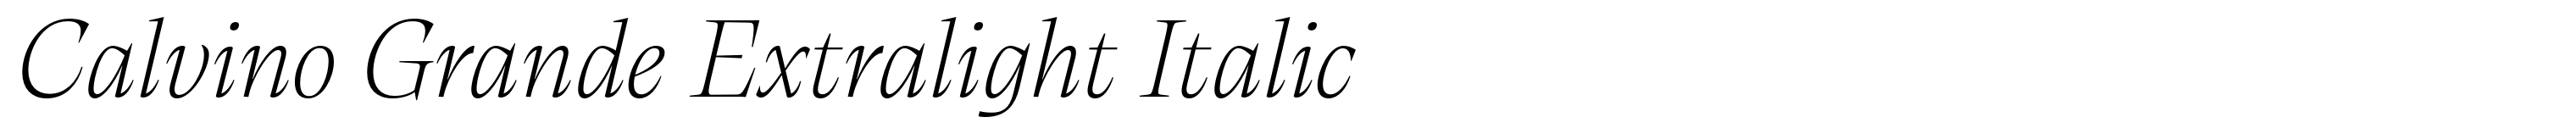 Calvino Grande Extralight Italic